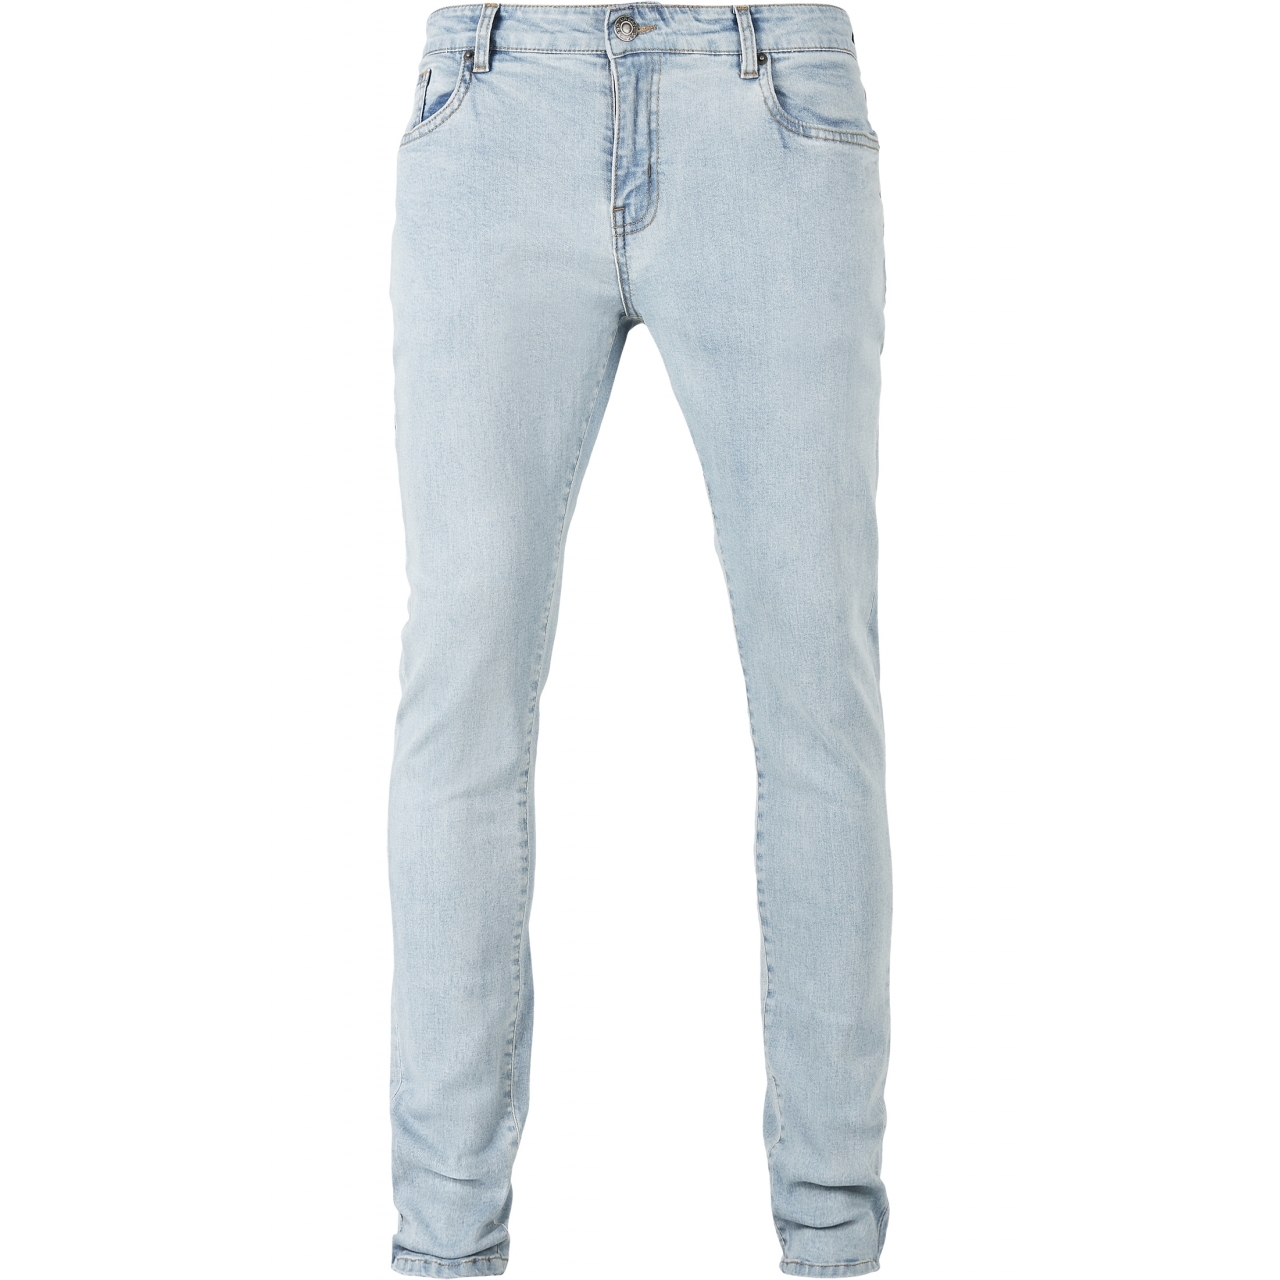 Džíny Urban Classics Slim Fit Zip Jeans - modré, 31/34